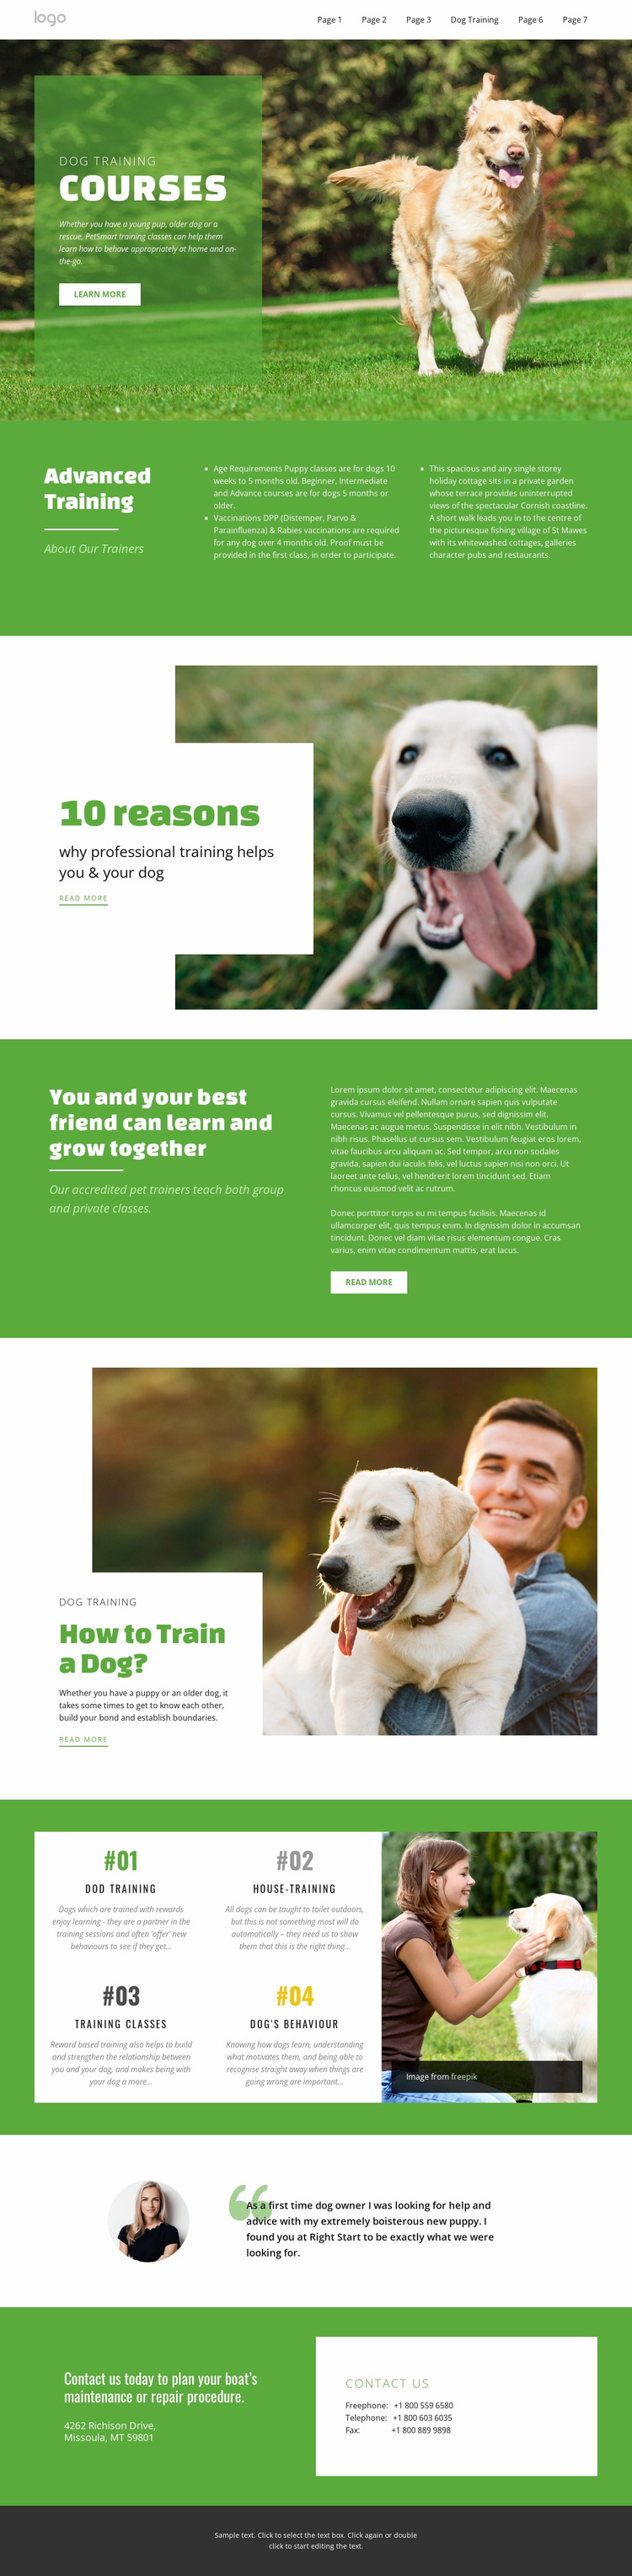 Training courses for pets Website Design